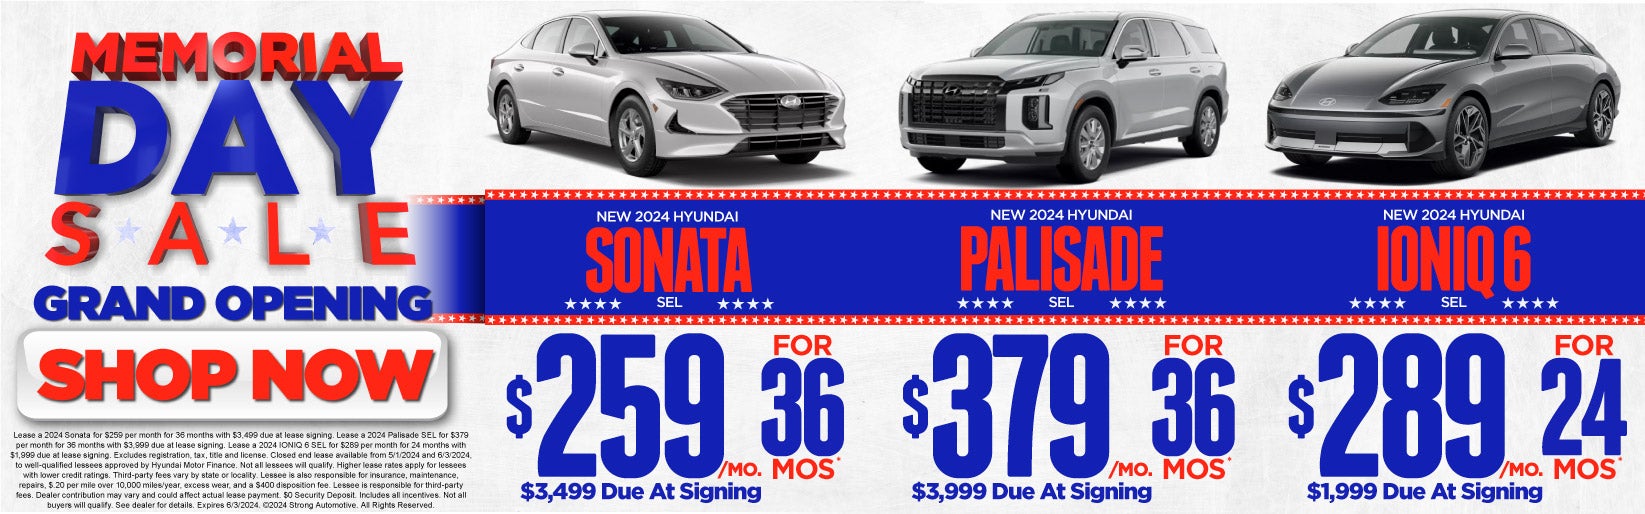 Hyundai Sonata, Palisade, or Ioniq 6 - Shop Now